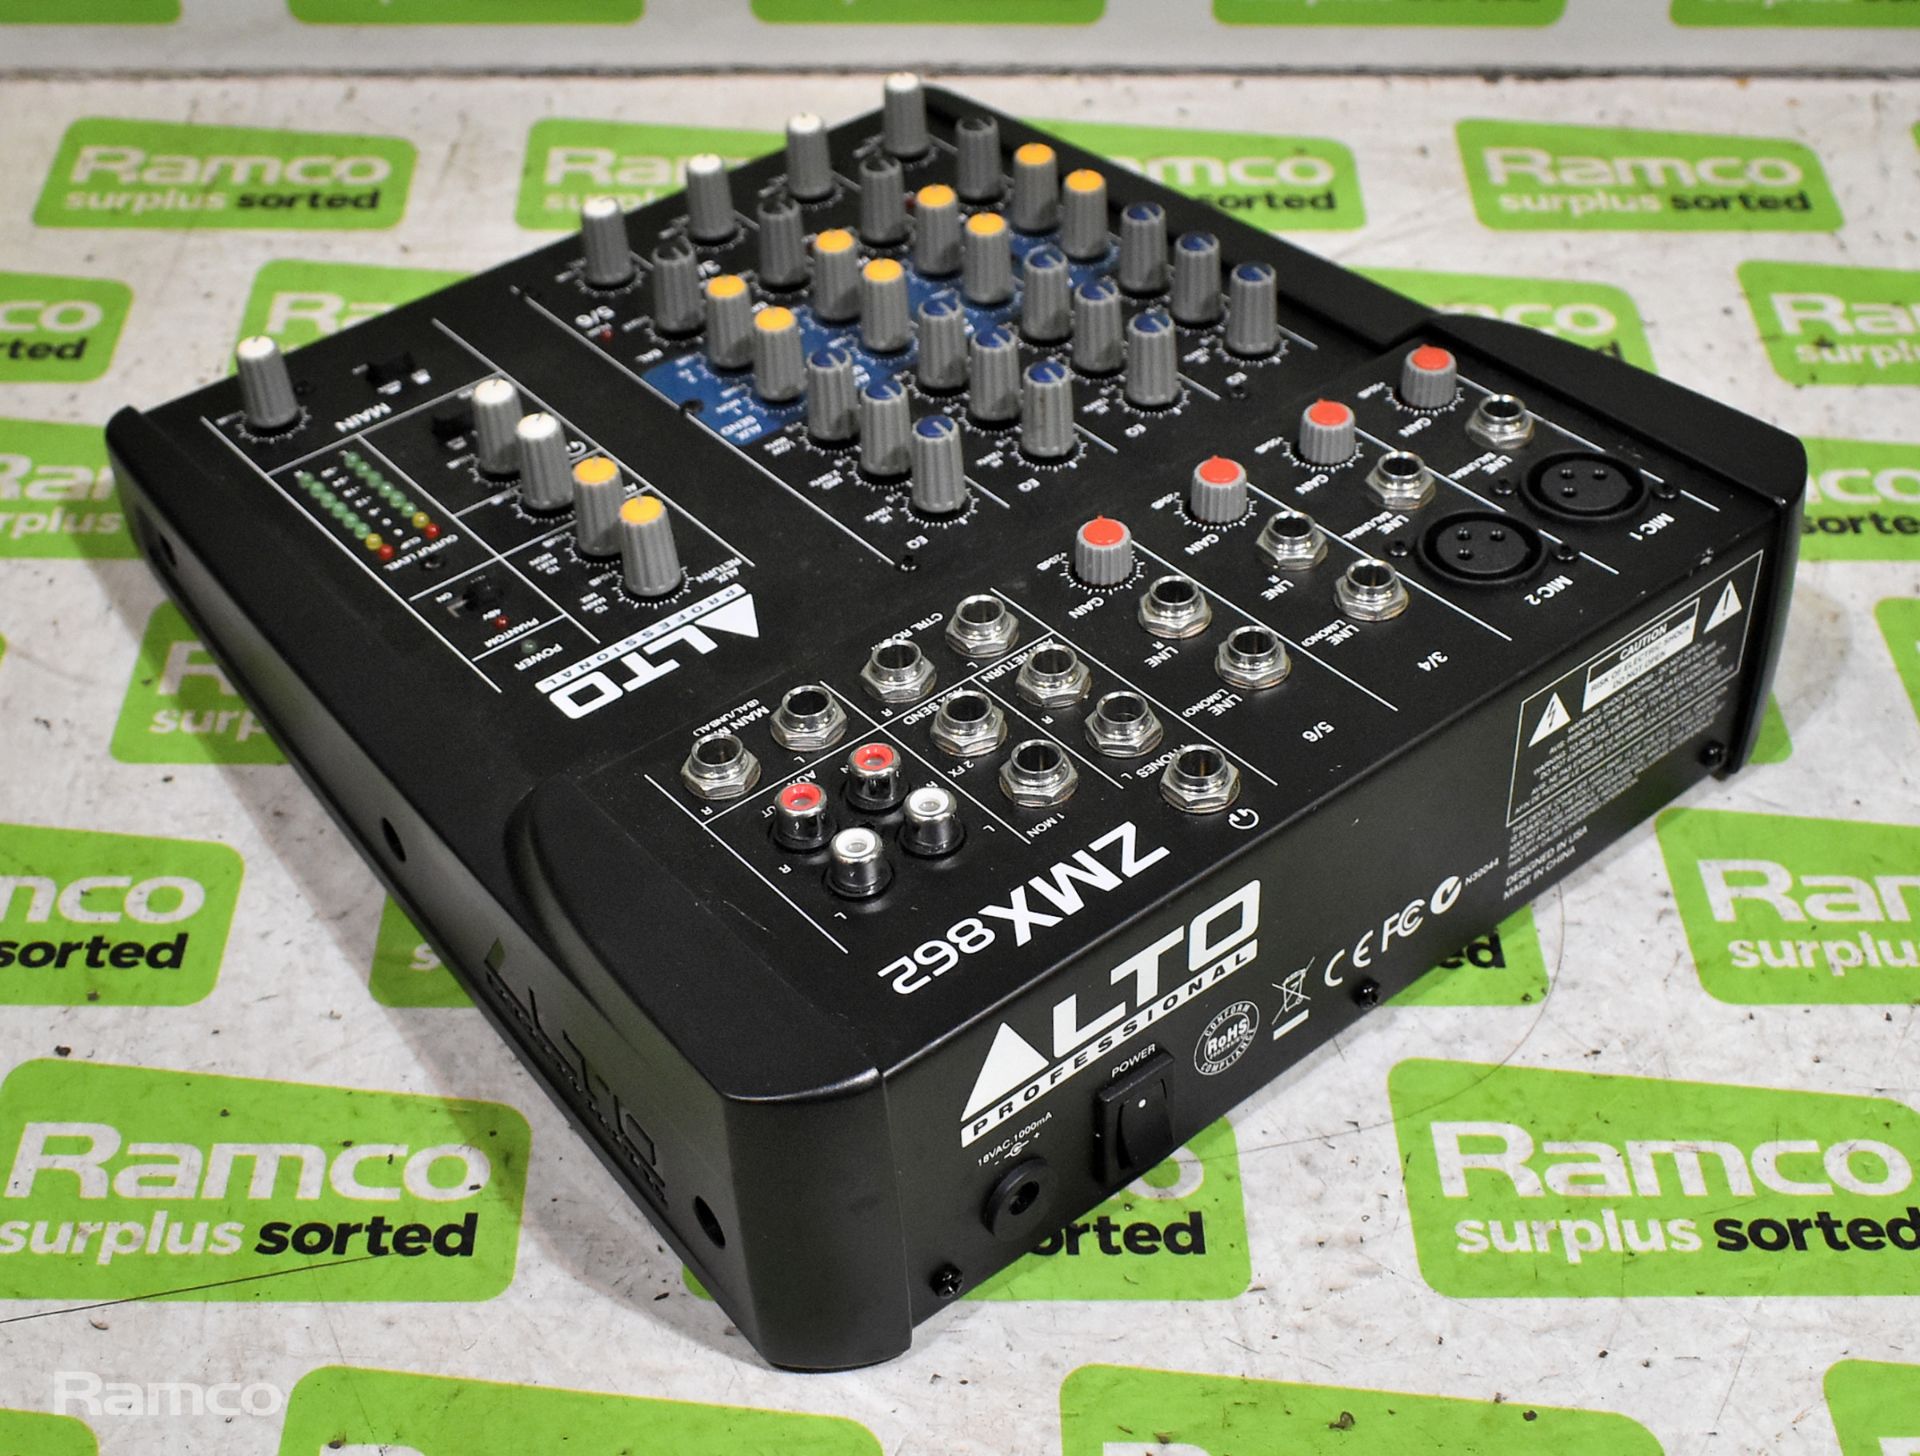 ALTO Pro ZMX862 6-channel 2-bus mixer, Yamaha MV800 audio mixer - Image 11 of 12